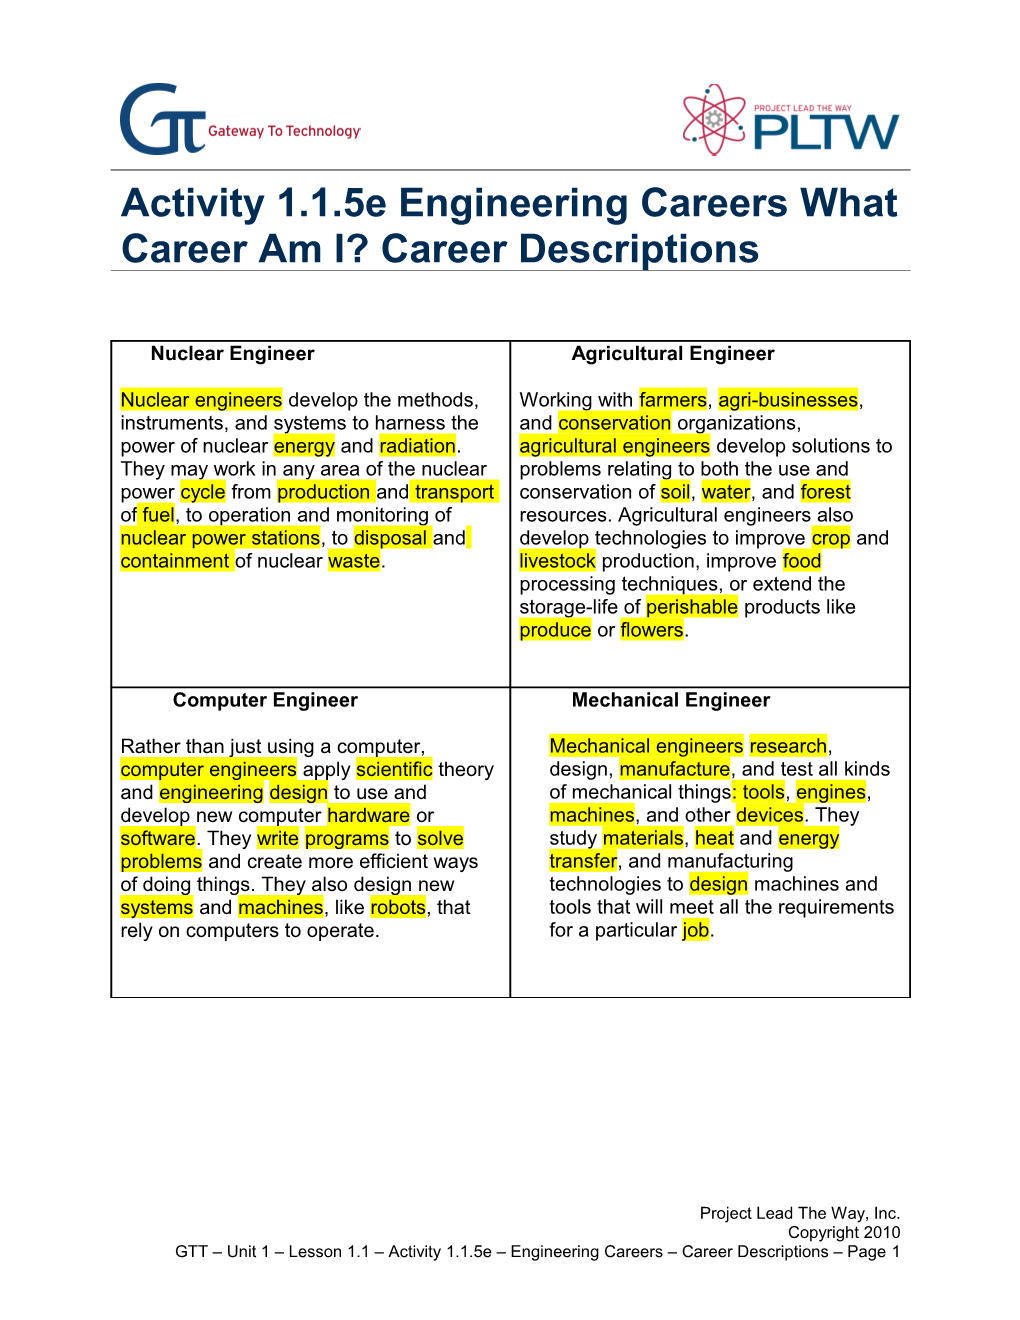 Activity 1.1.5E Engineering Careers - Career Descriptions